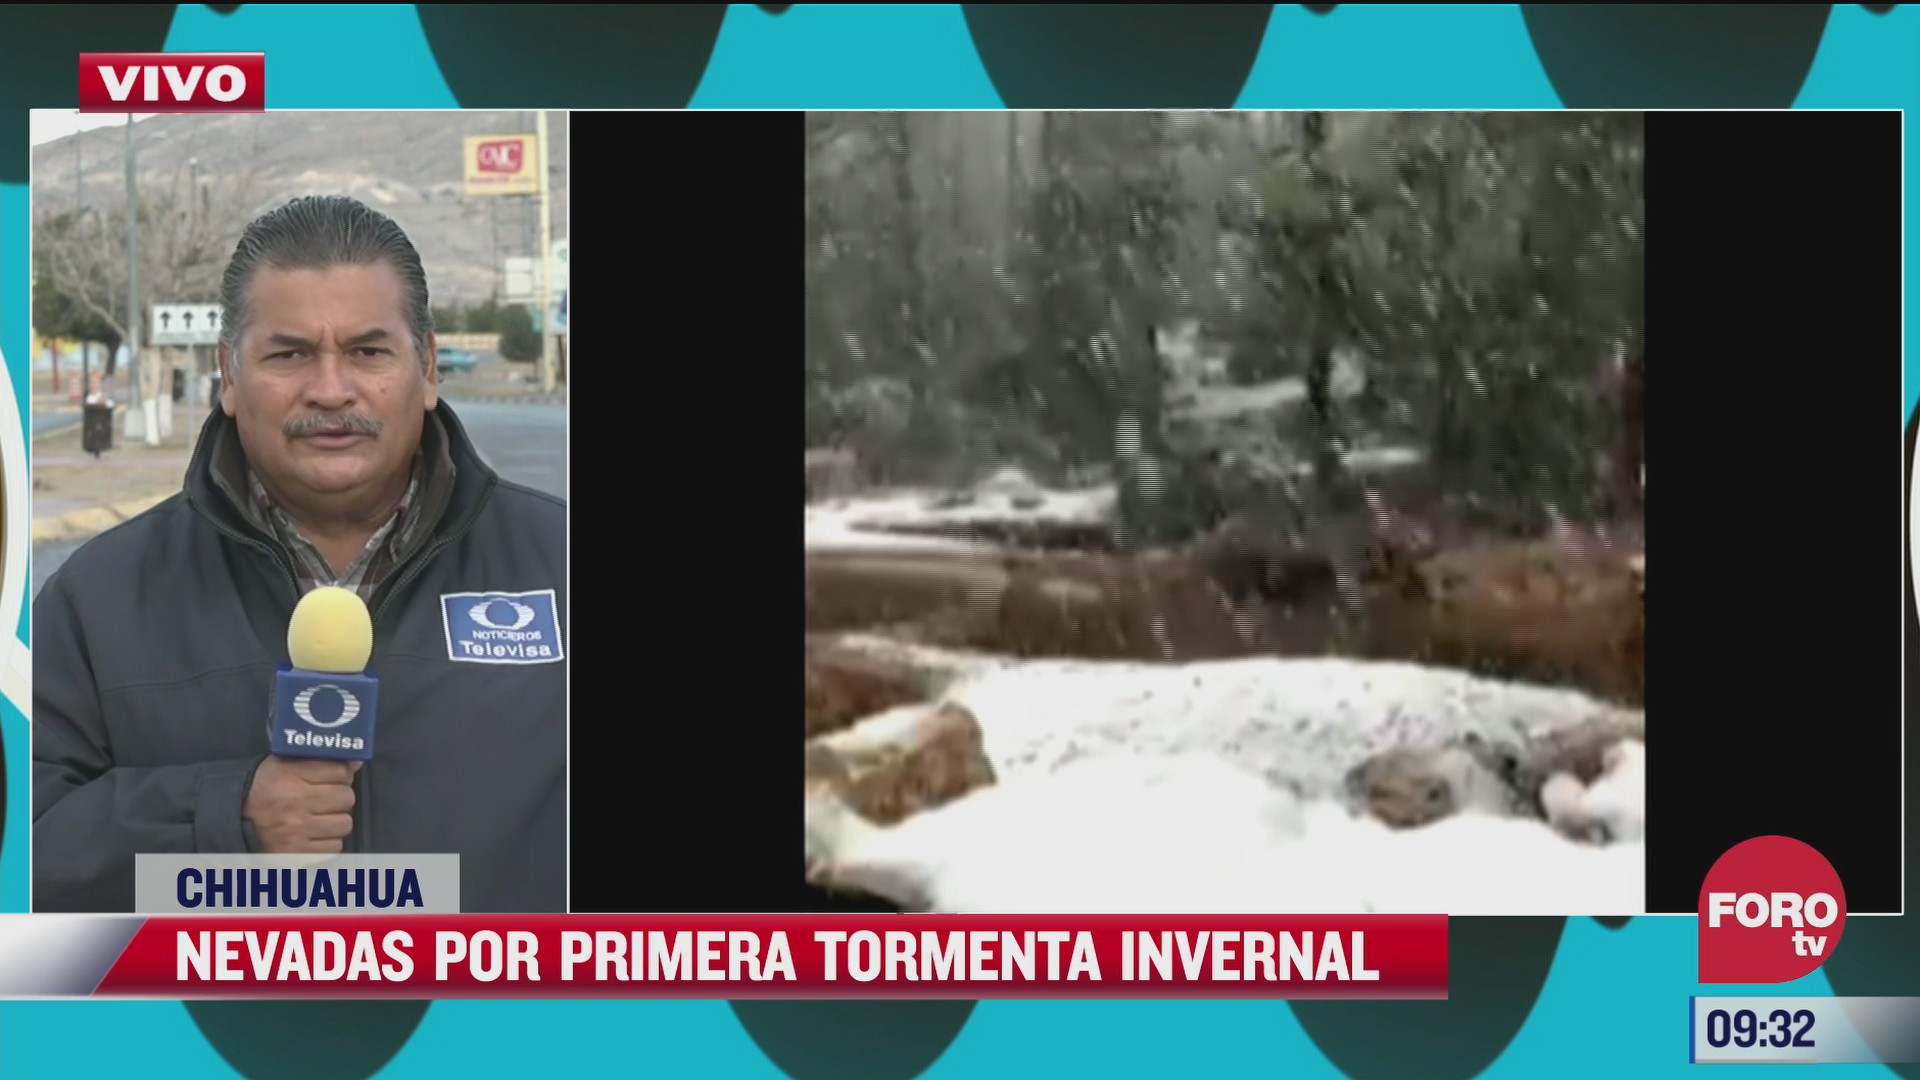 se registran nevadas en chihuahua por primera tormenta invernal